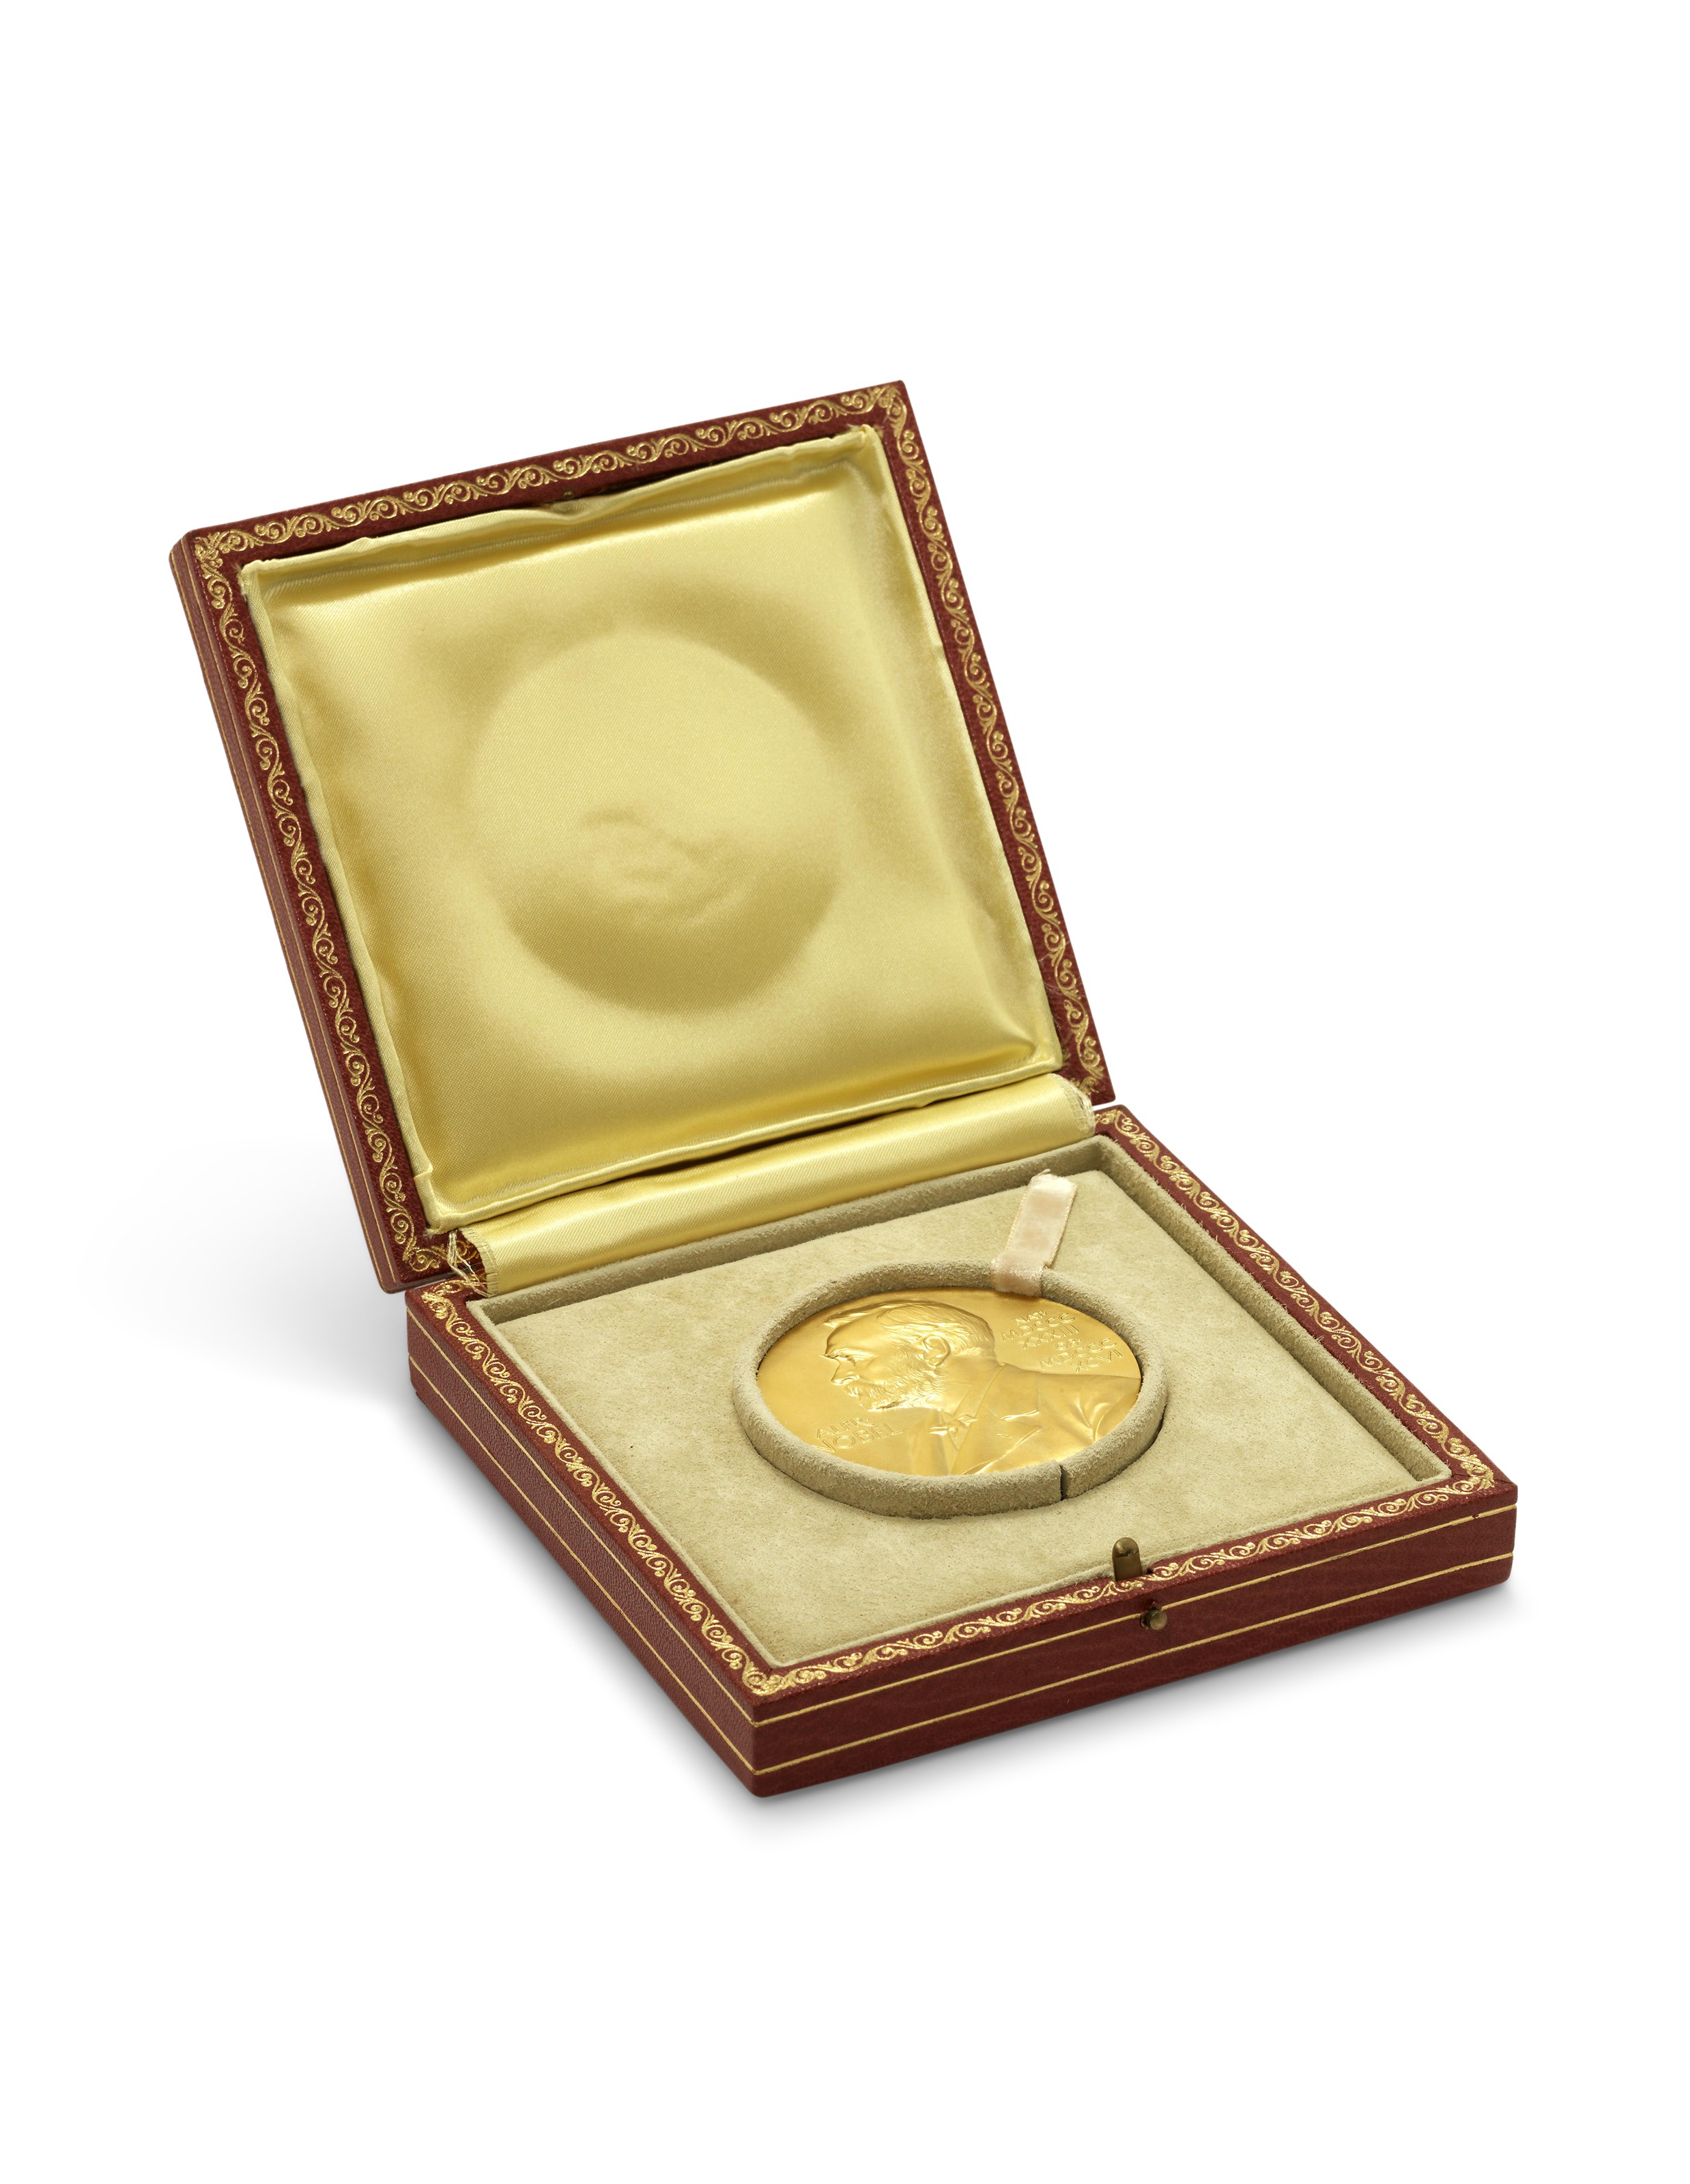 The IVF Nobel Medal of Sir Robert Edwards